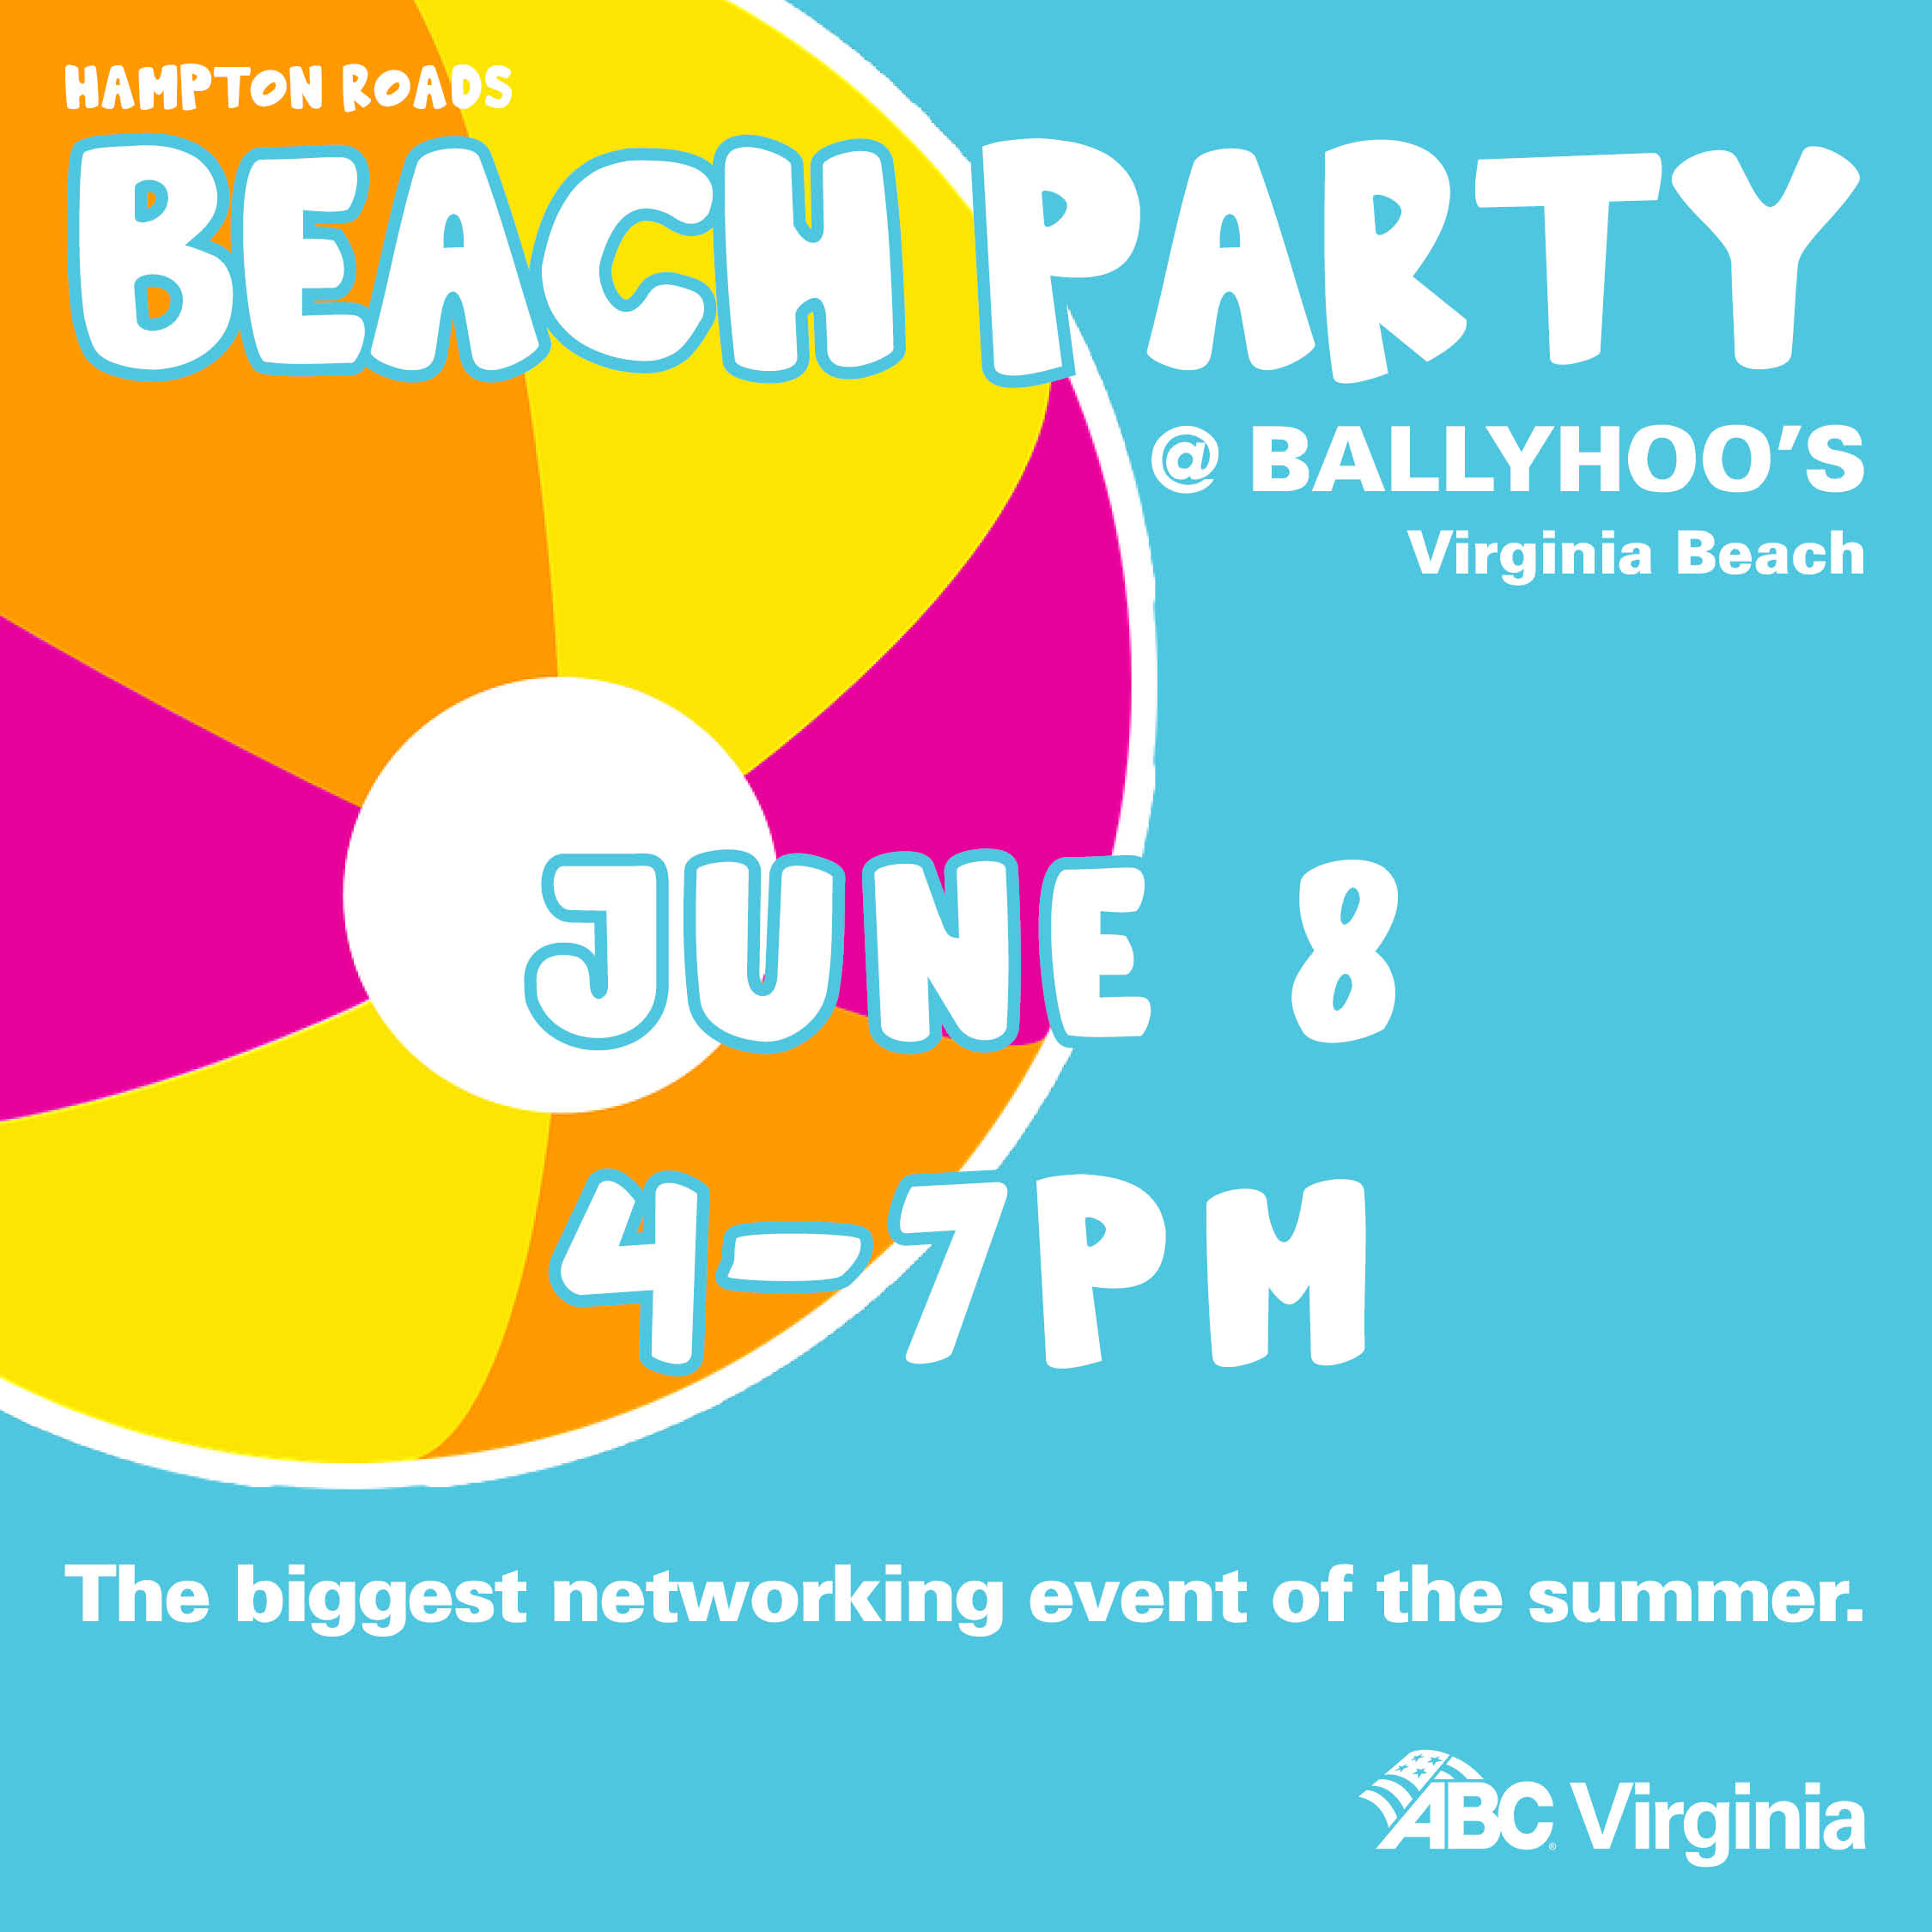 HR Ballyhoos Beach Party June 8 INSTA